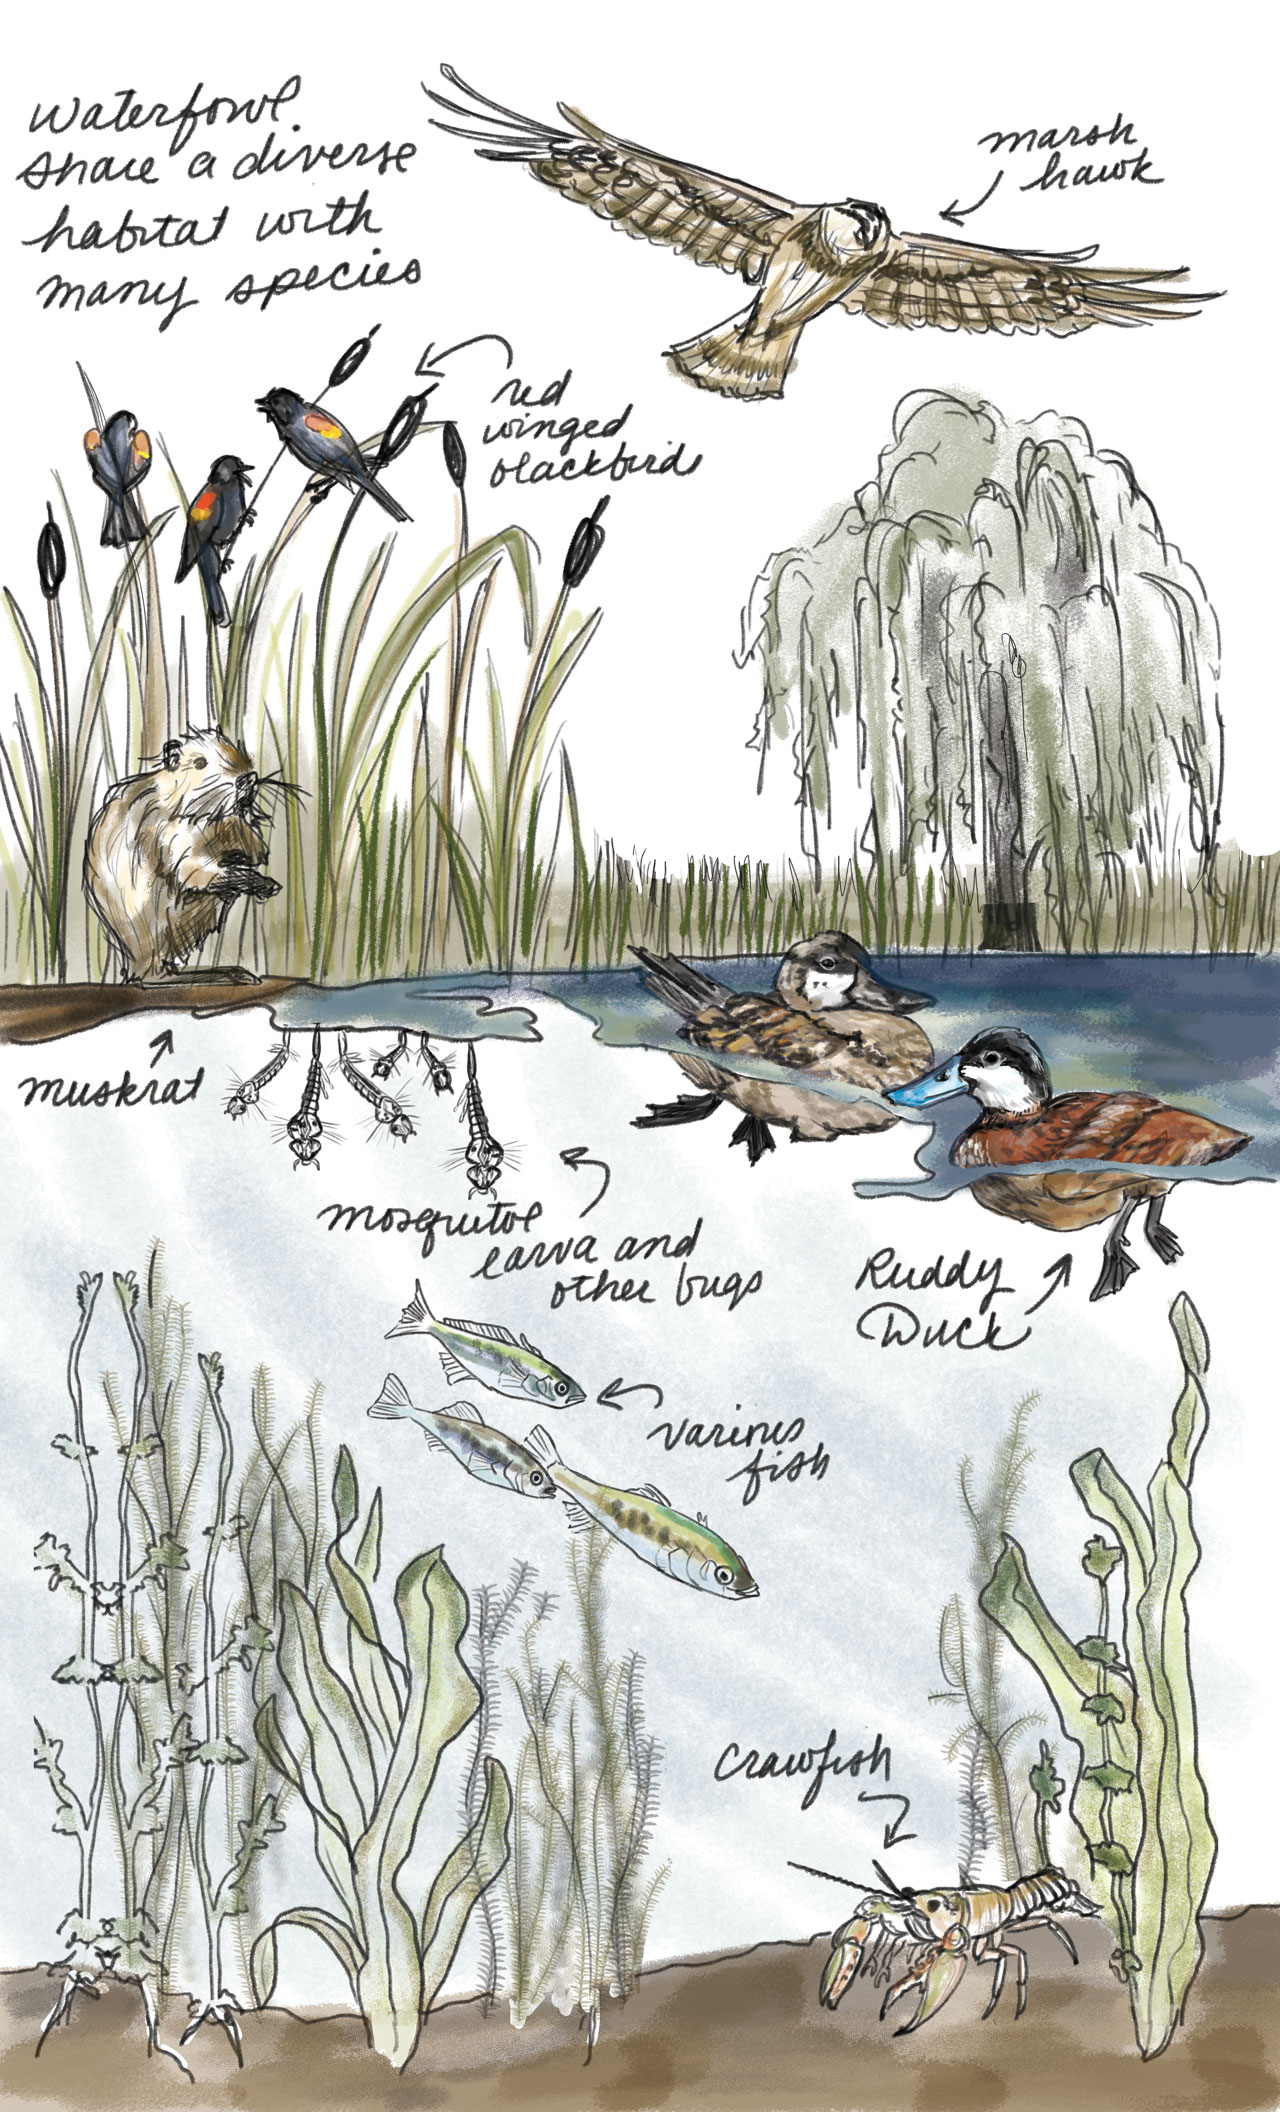 Wildlife book frontispiece illustration